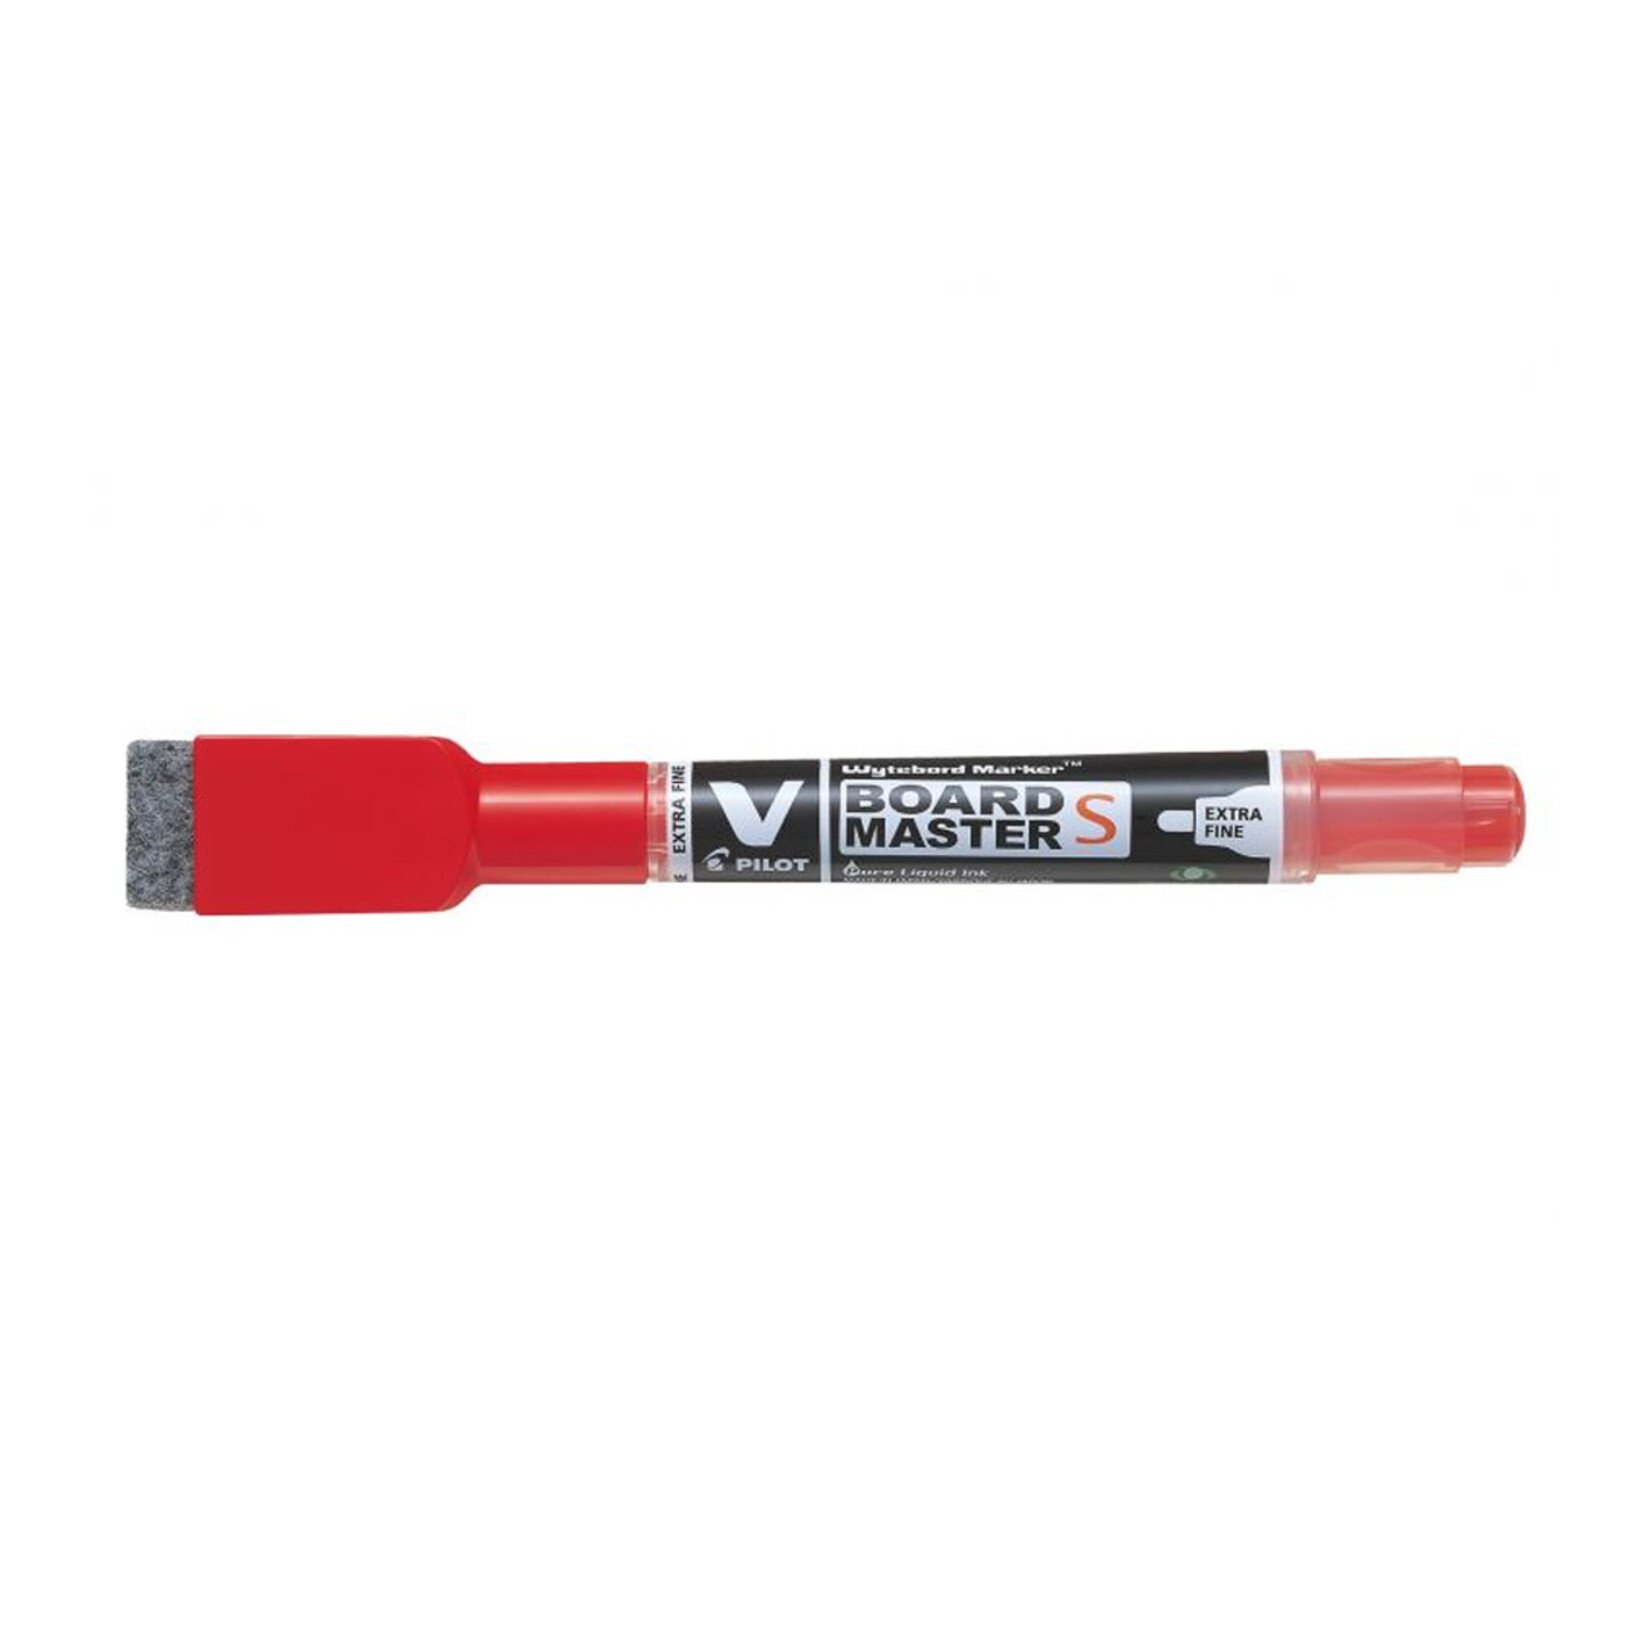 Pilot V-Board Master S Extra Fine Whiteboard Marker with Eraser - Red